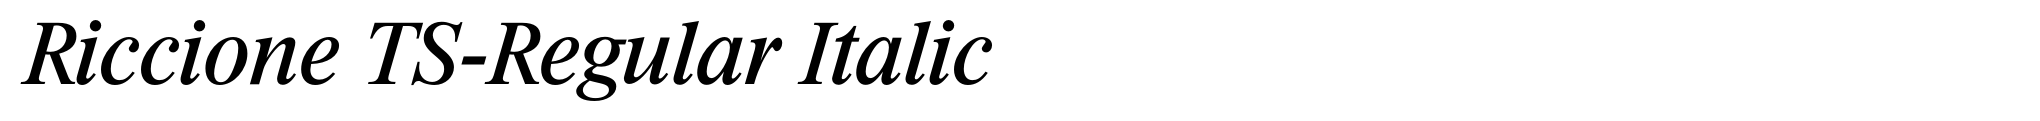 Riccione TS-Regular Italic image